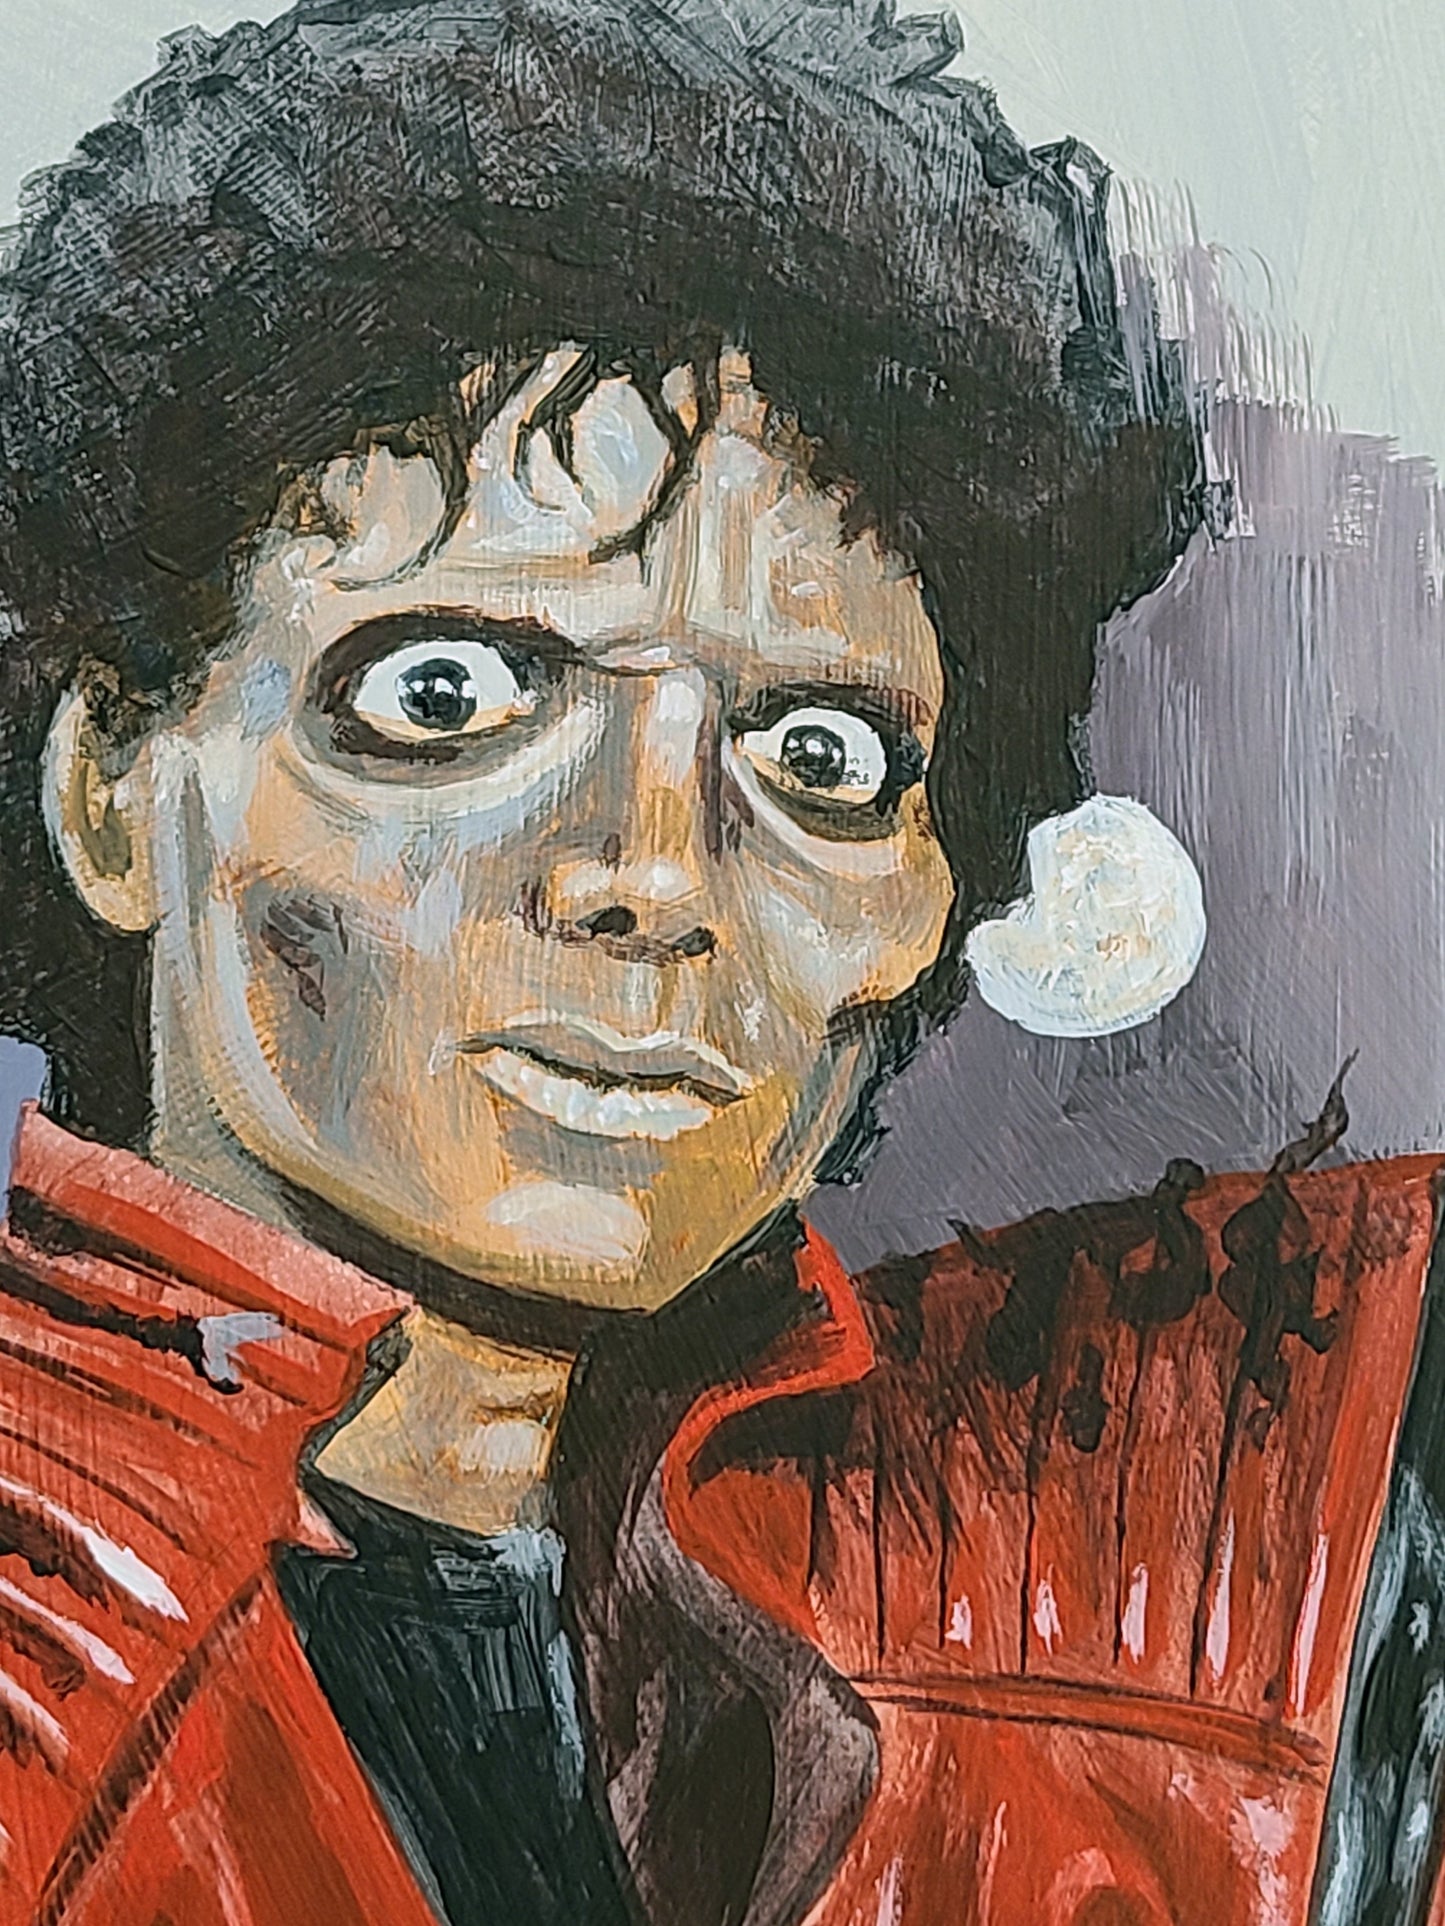 Michael Jackson Thriller painting